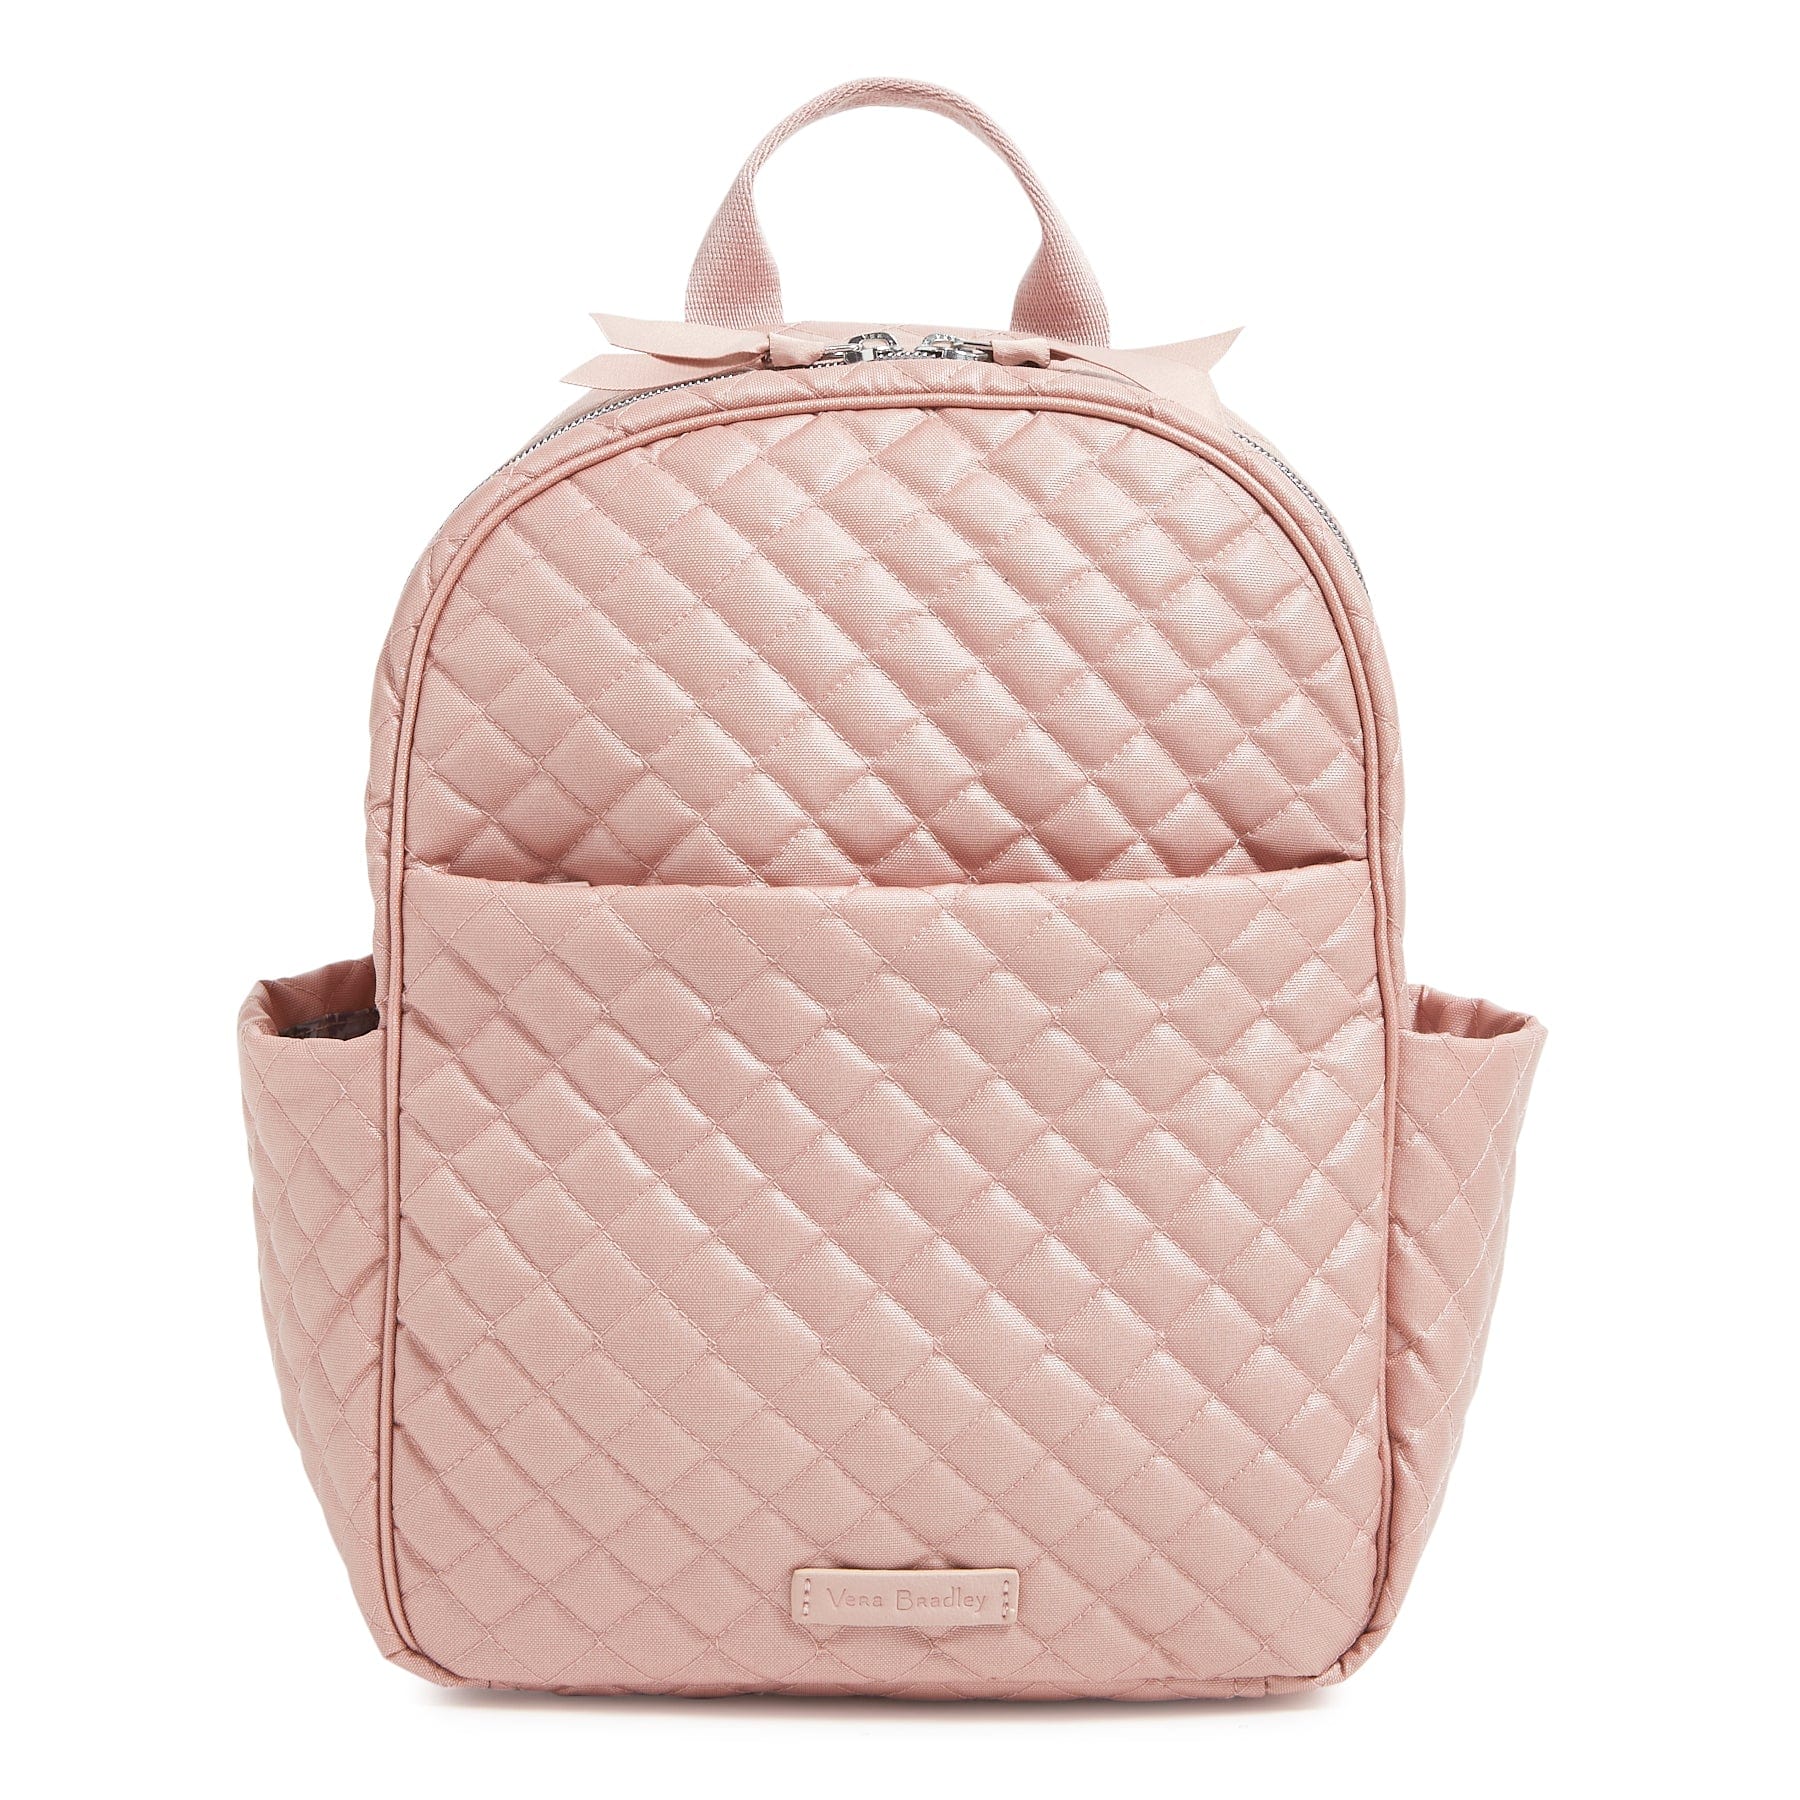 Small Backpack-Rose Quartz-Image 1-Vera Bradley